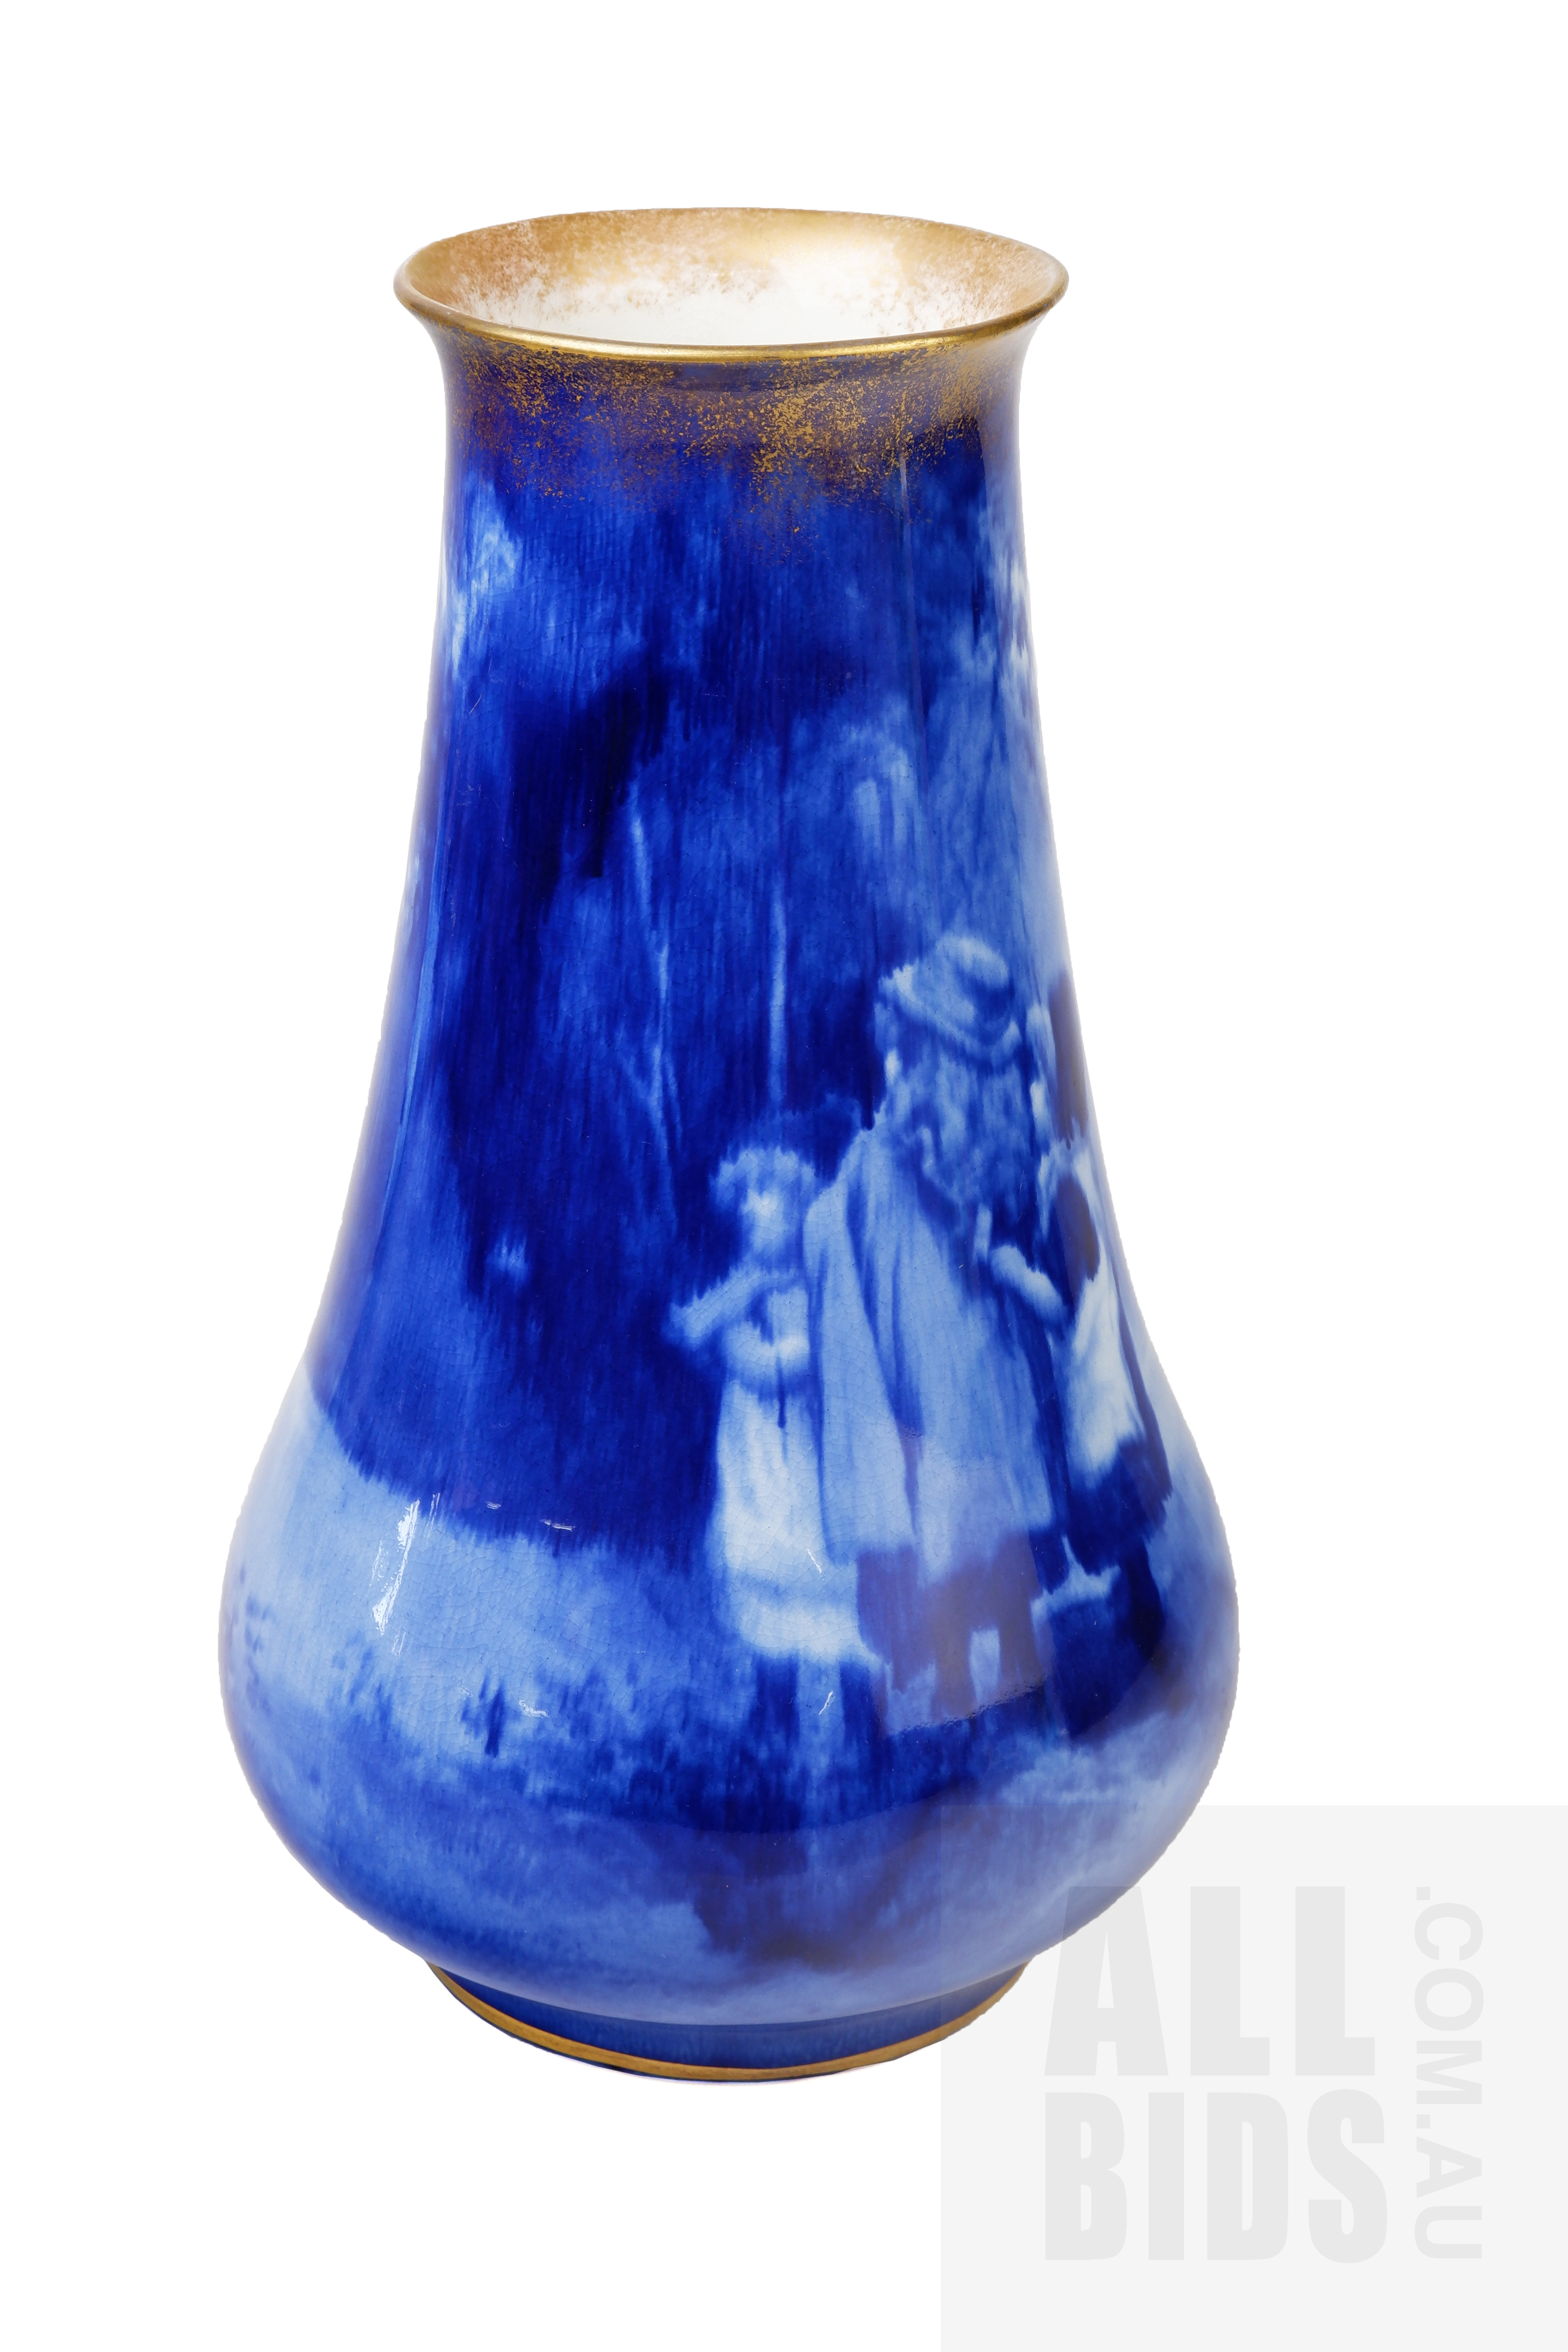 'Royal Doulton Blue Children Series Ware Vase'